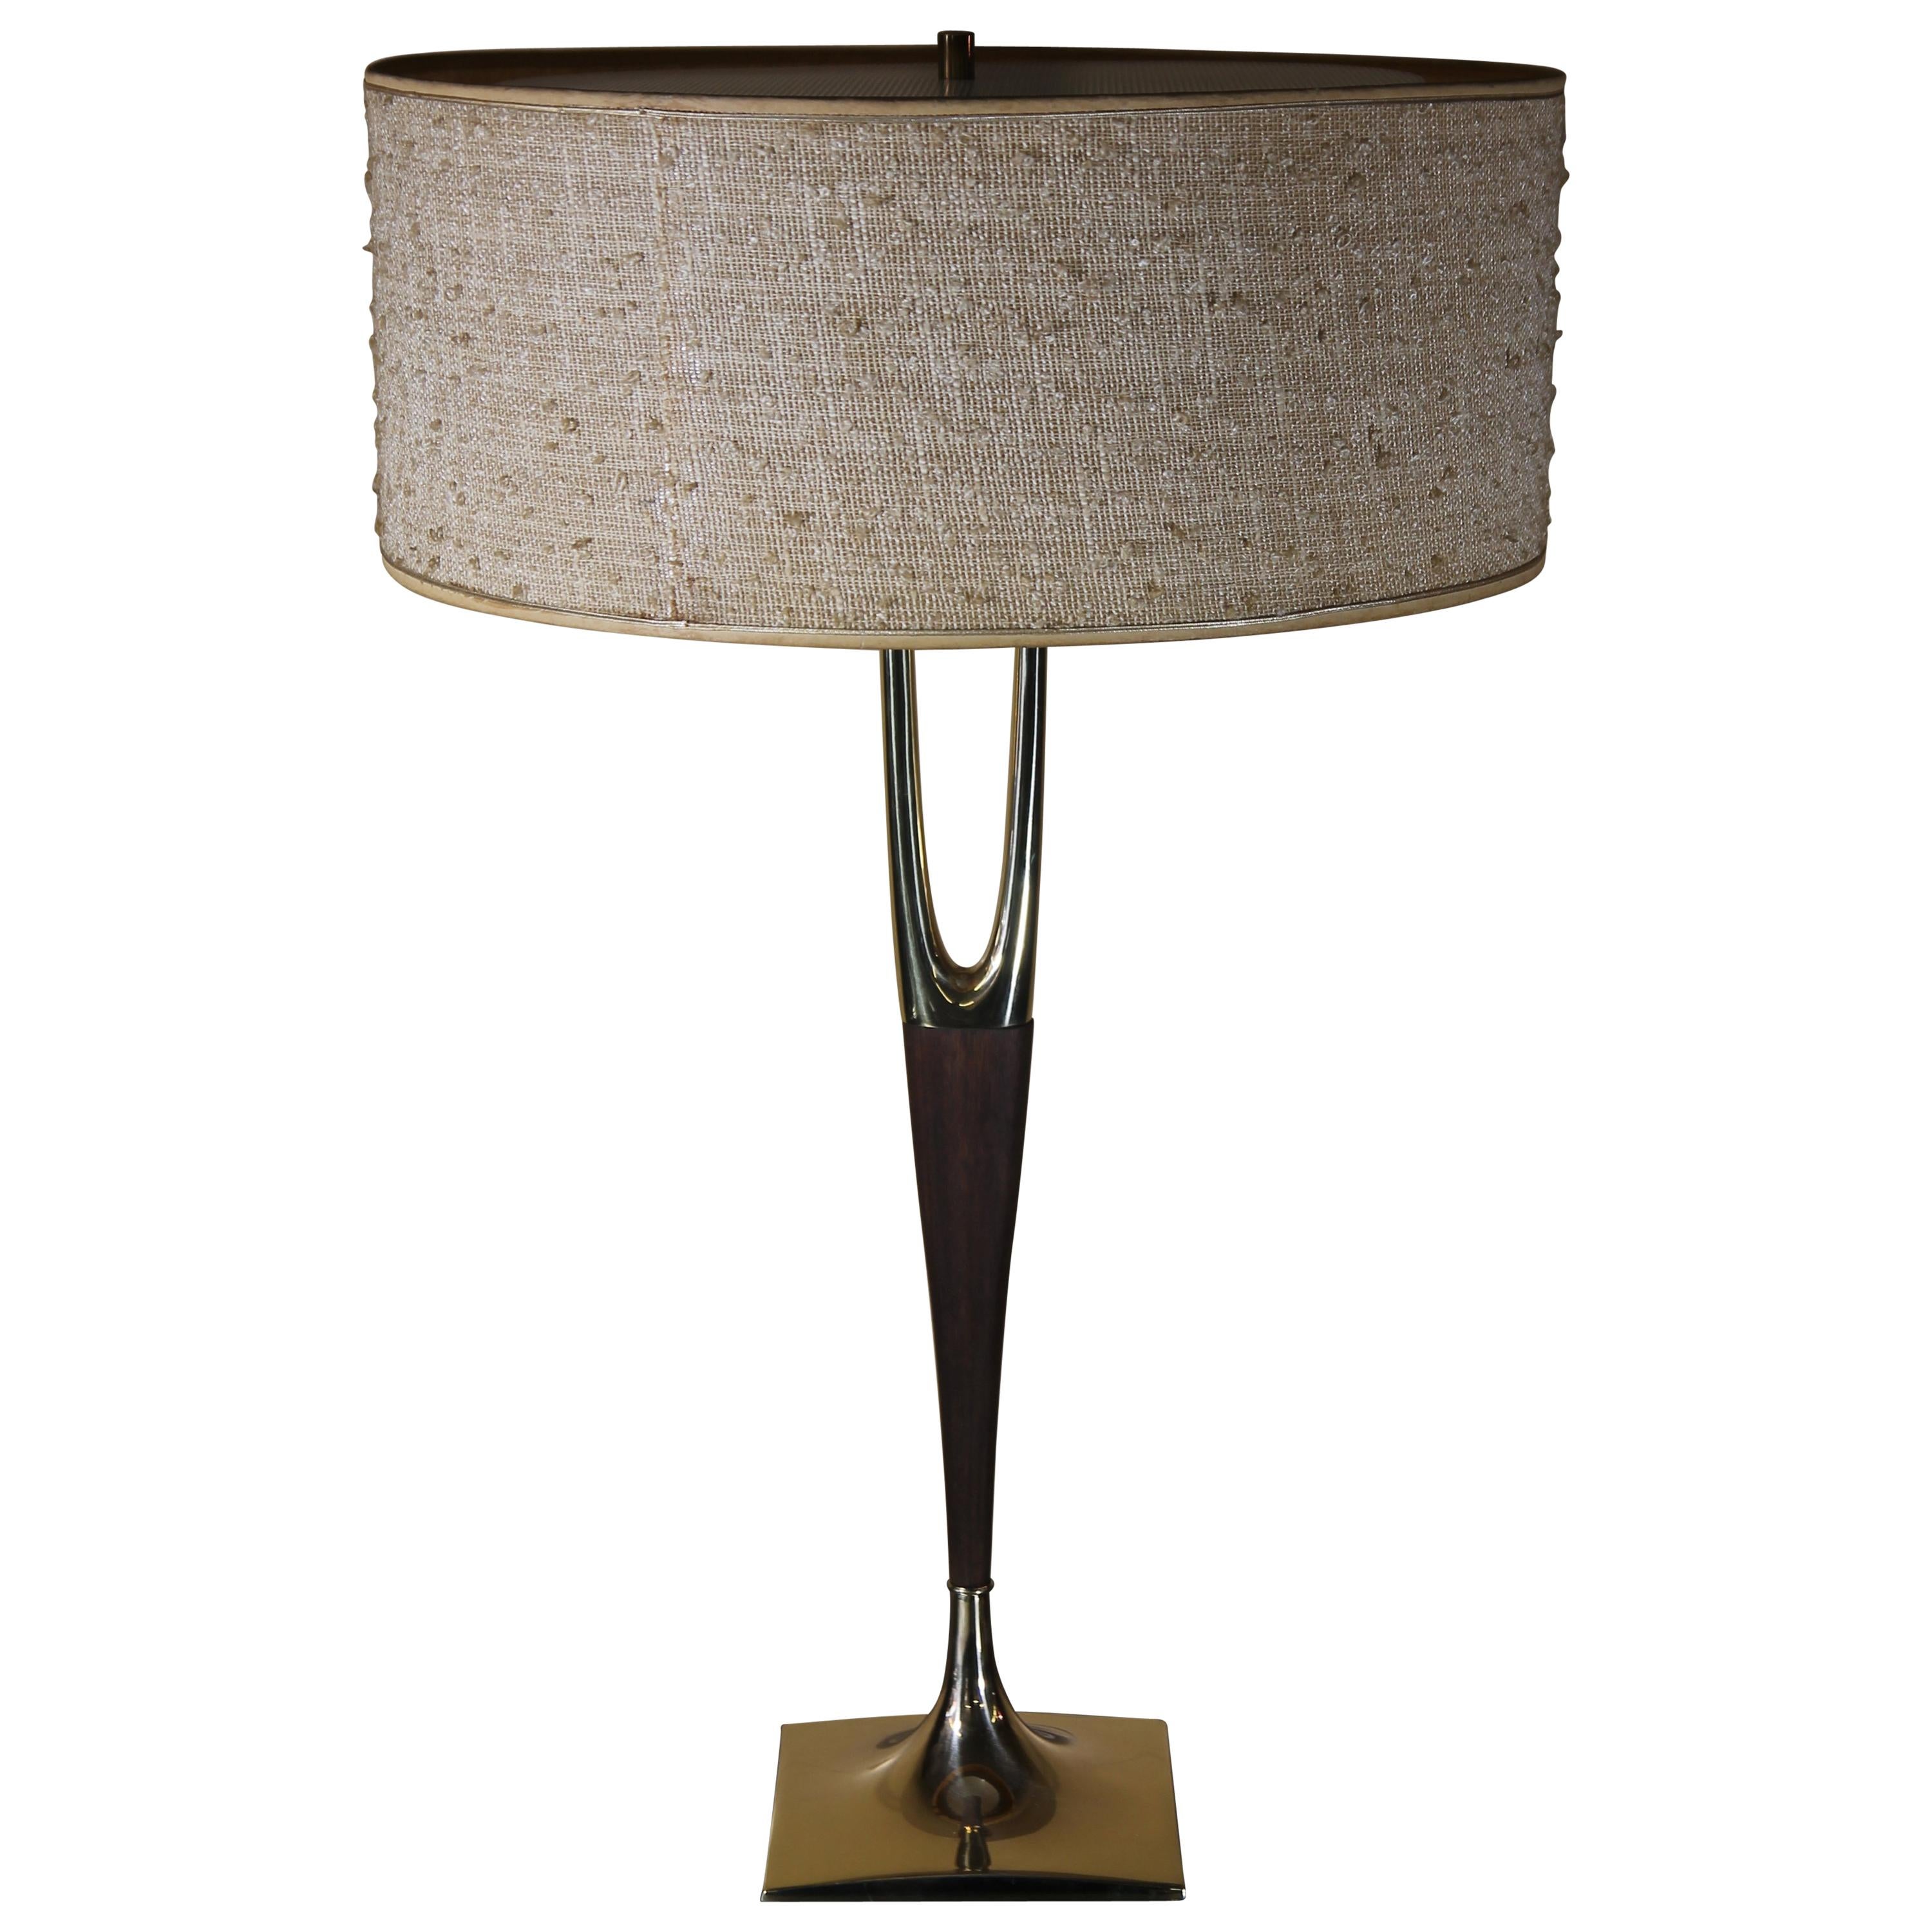 Gerald Thurston for Laurel Lamp Co, Wishbone Lamp